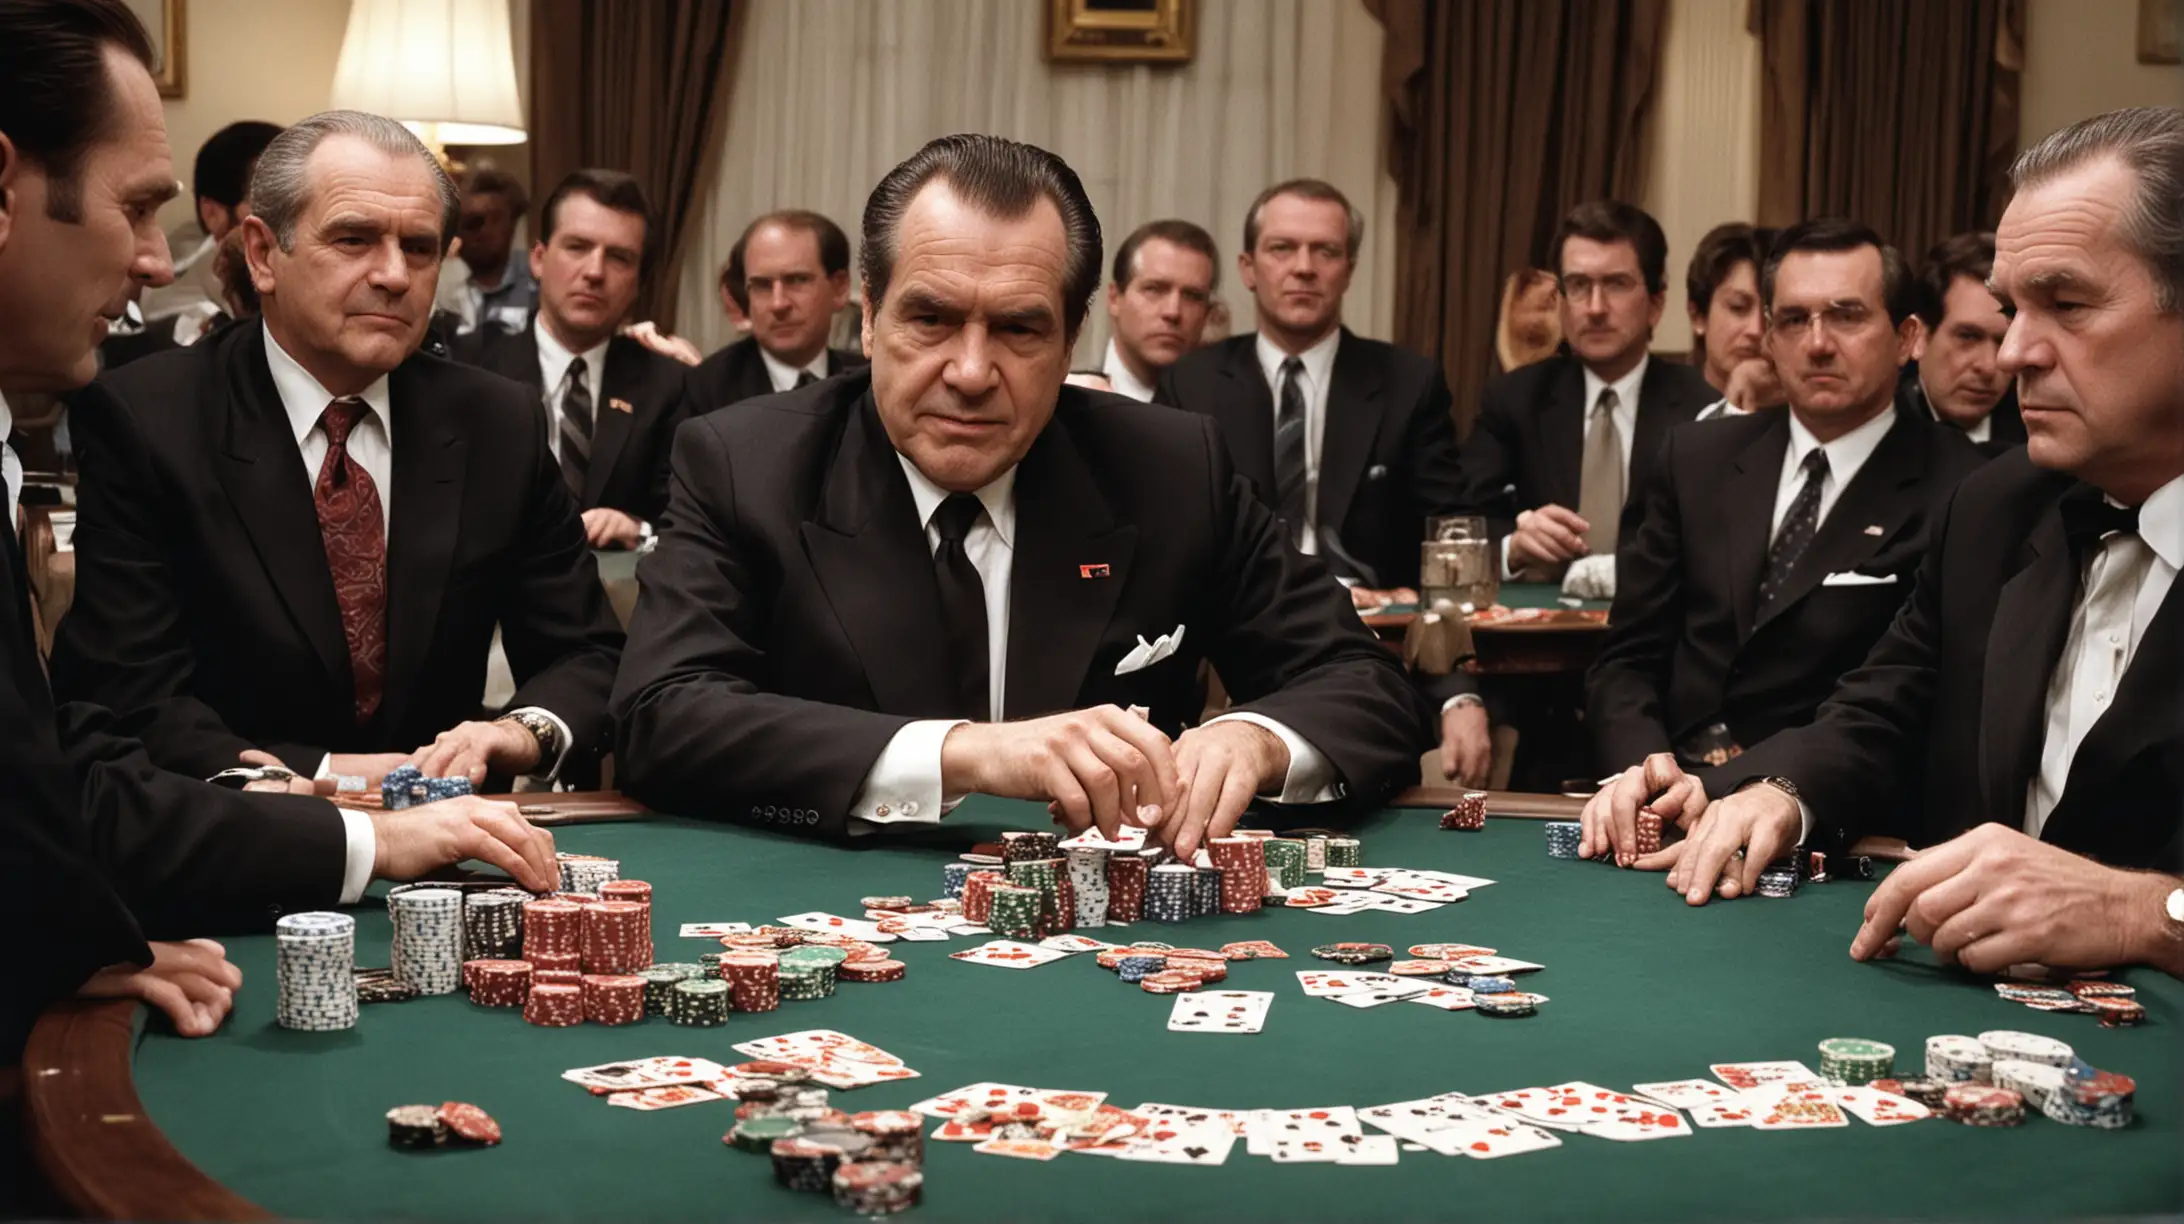 Richard Nixon Hosting Poker Nights at the White House